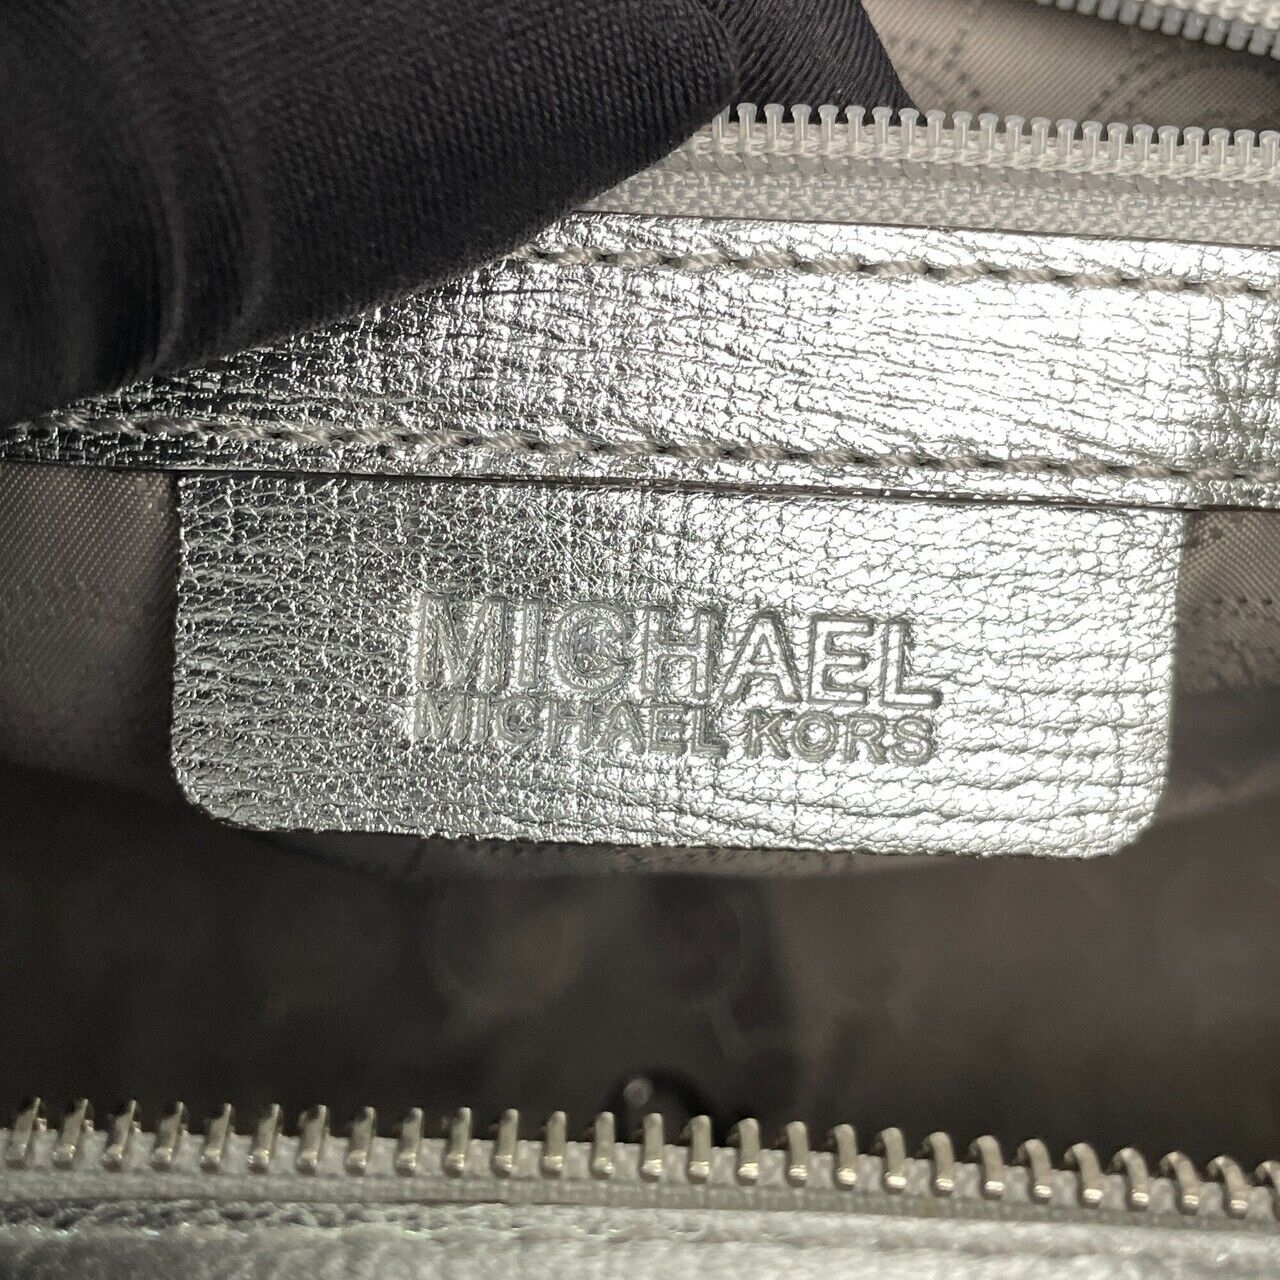 Michael Kors Silver Satchel Bag